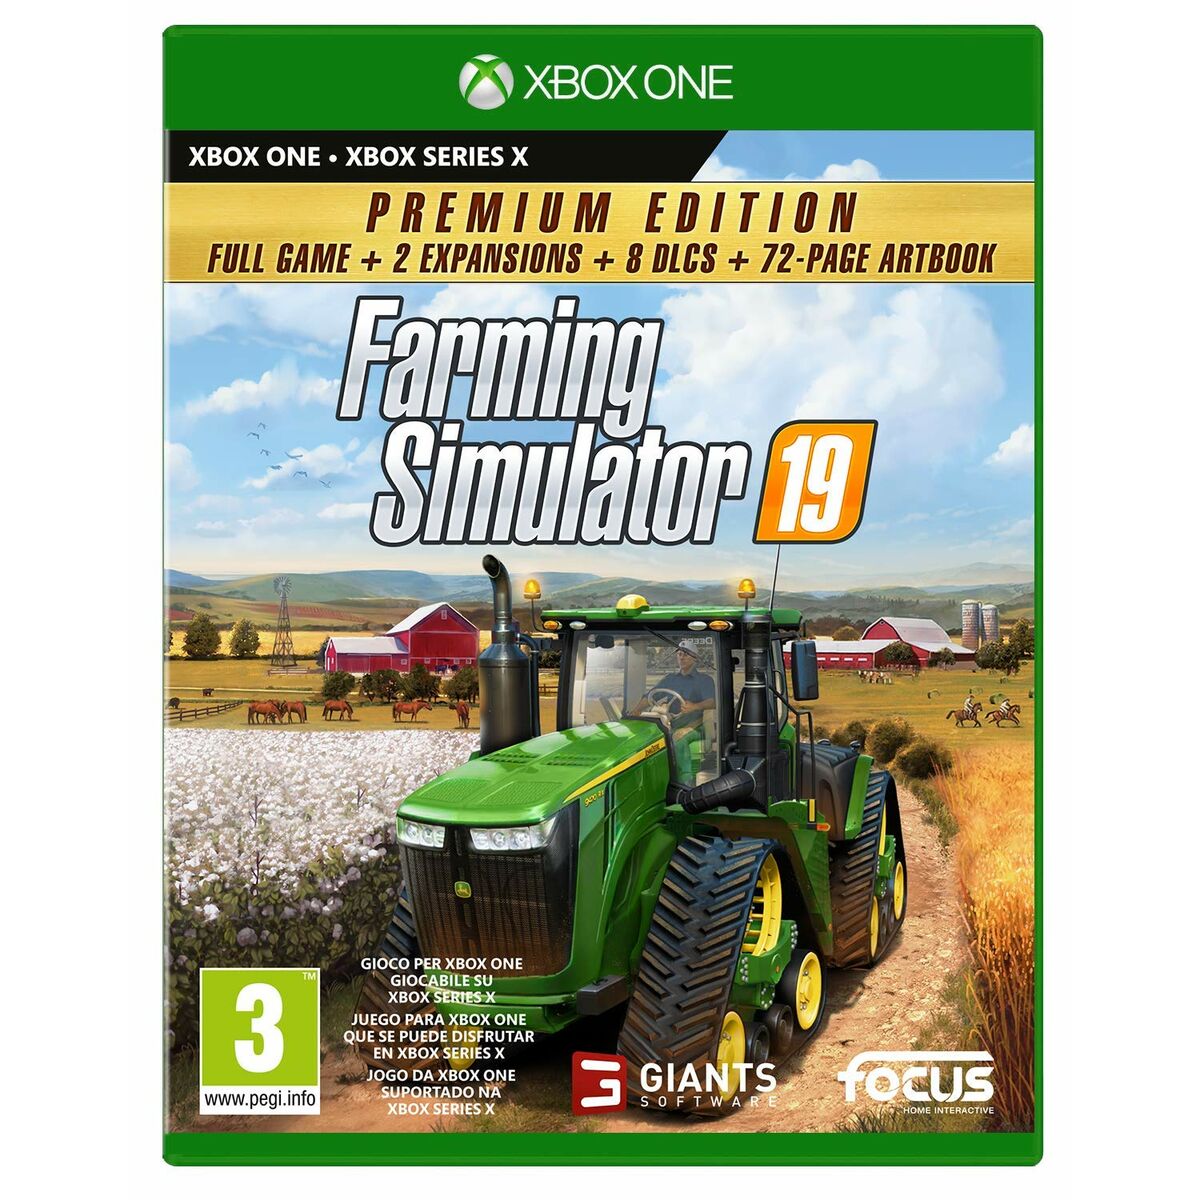 Xbox One Video Game KOCH MEDIA Farming Simulator 19: Premium Edition